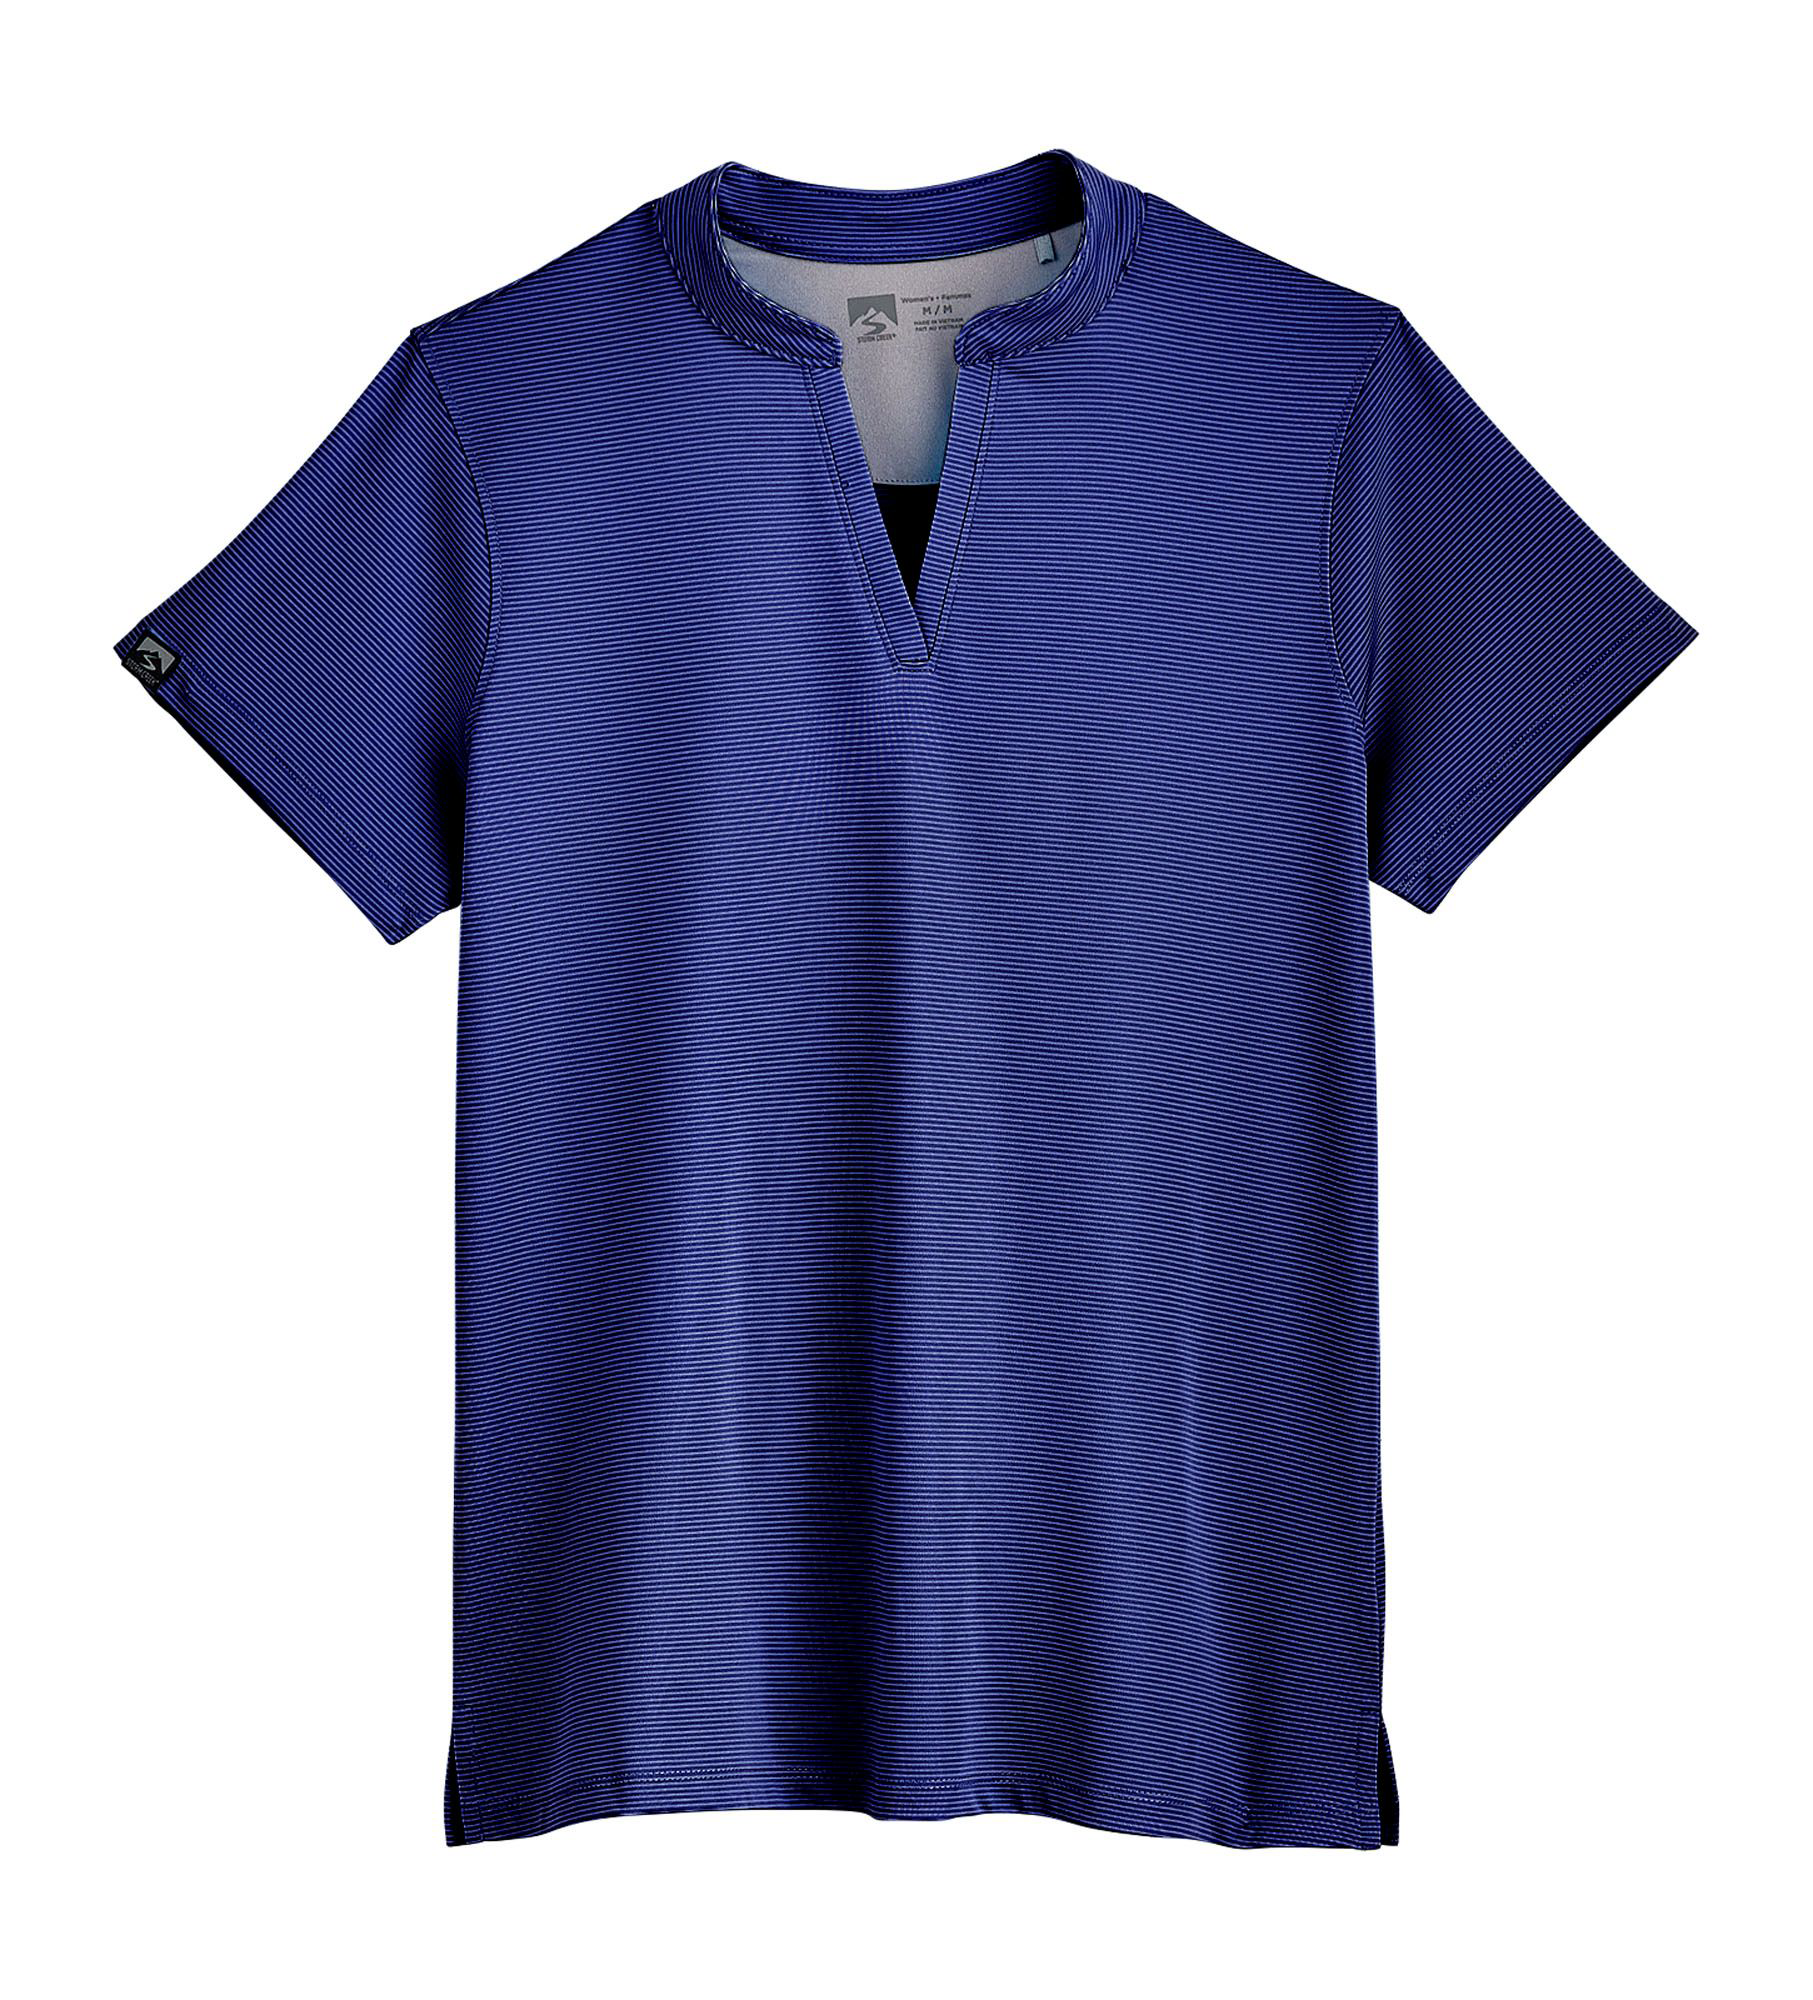 Storm Creek Optimist Short-Sleeve Polo Shirt for Ladies - Navy - XS